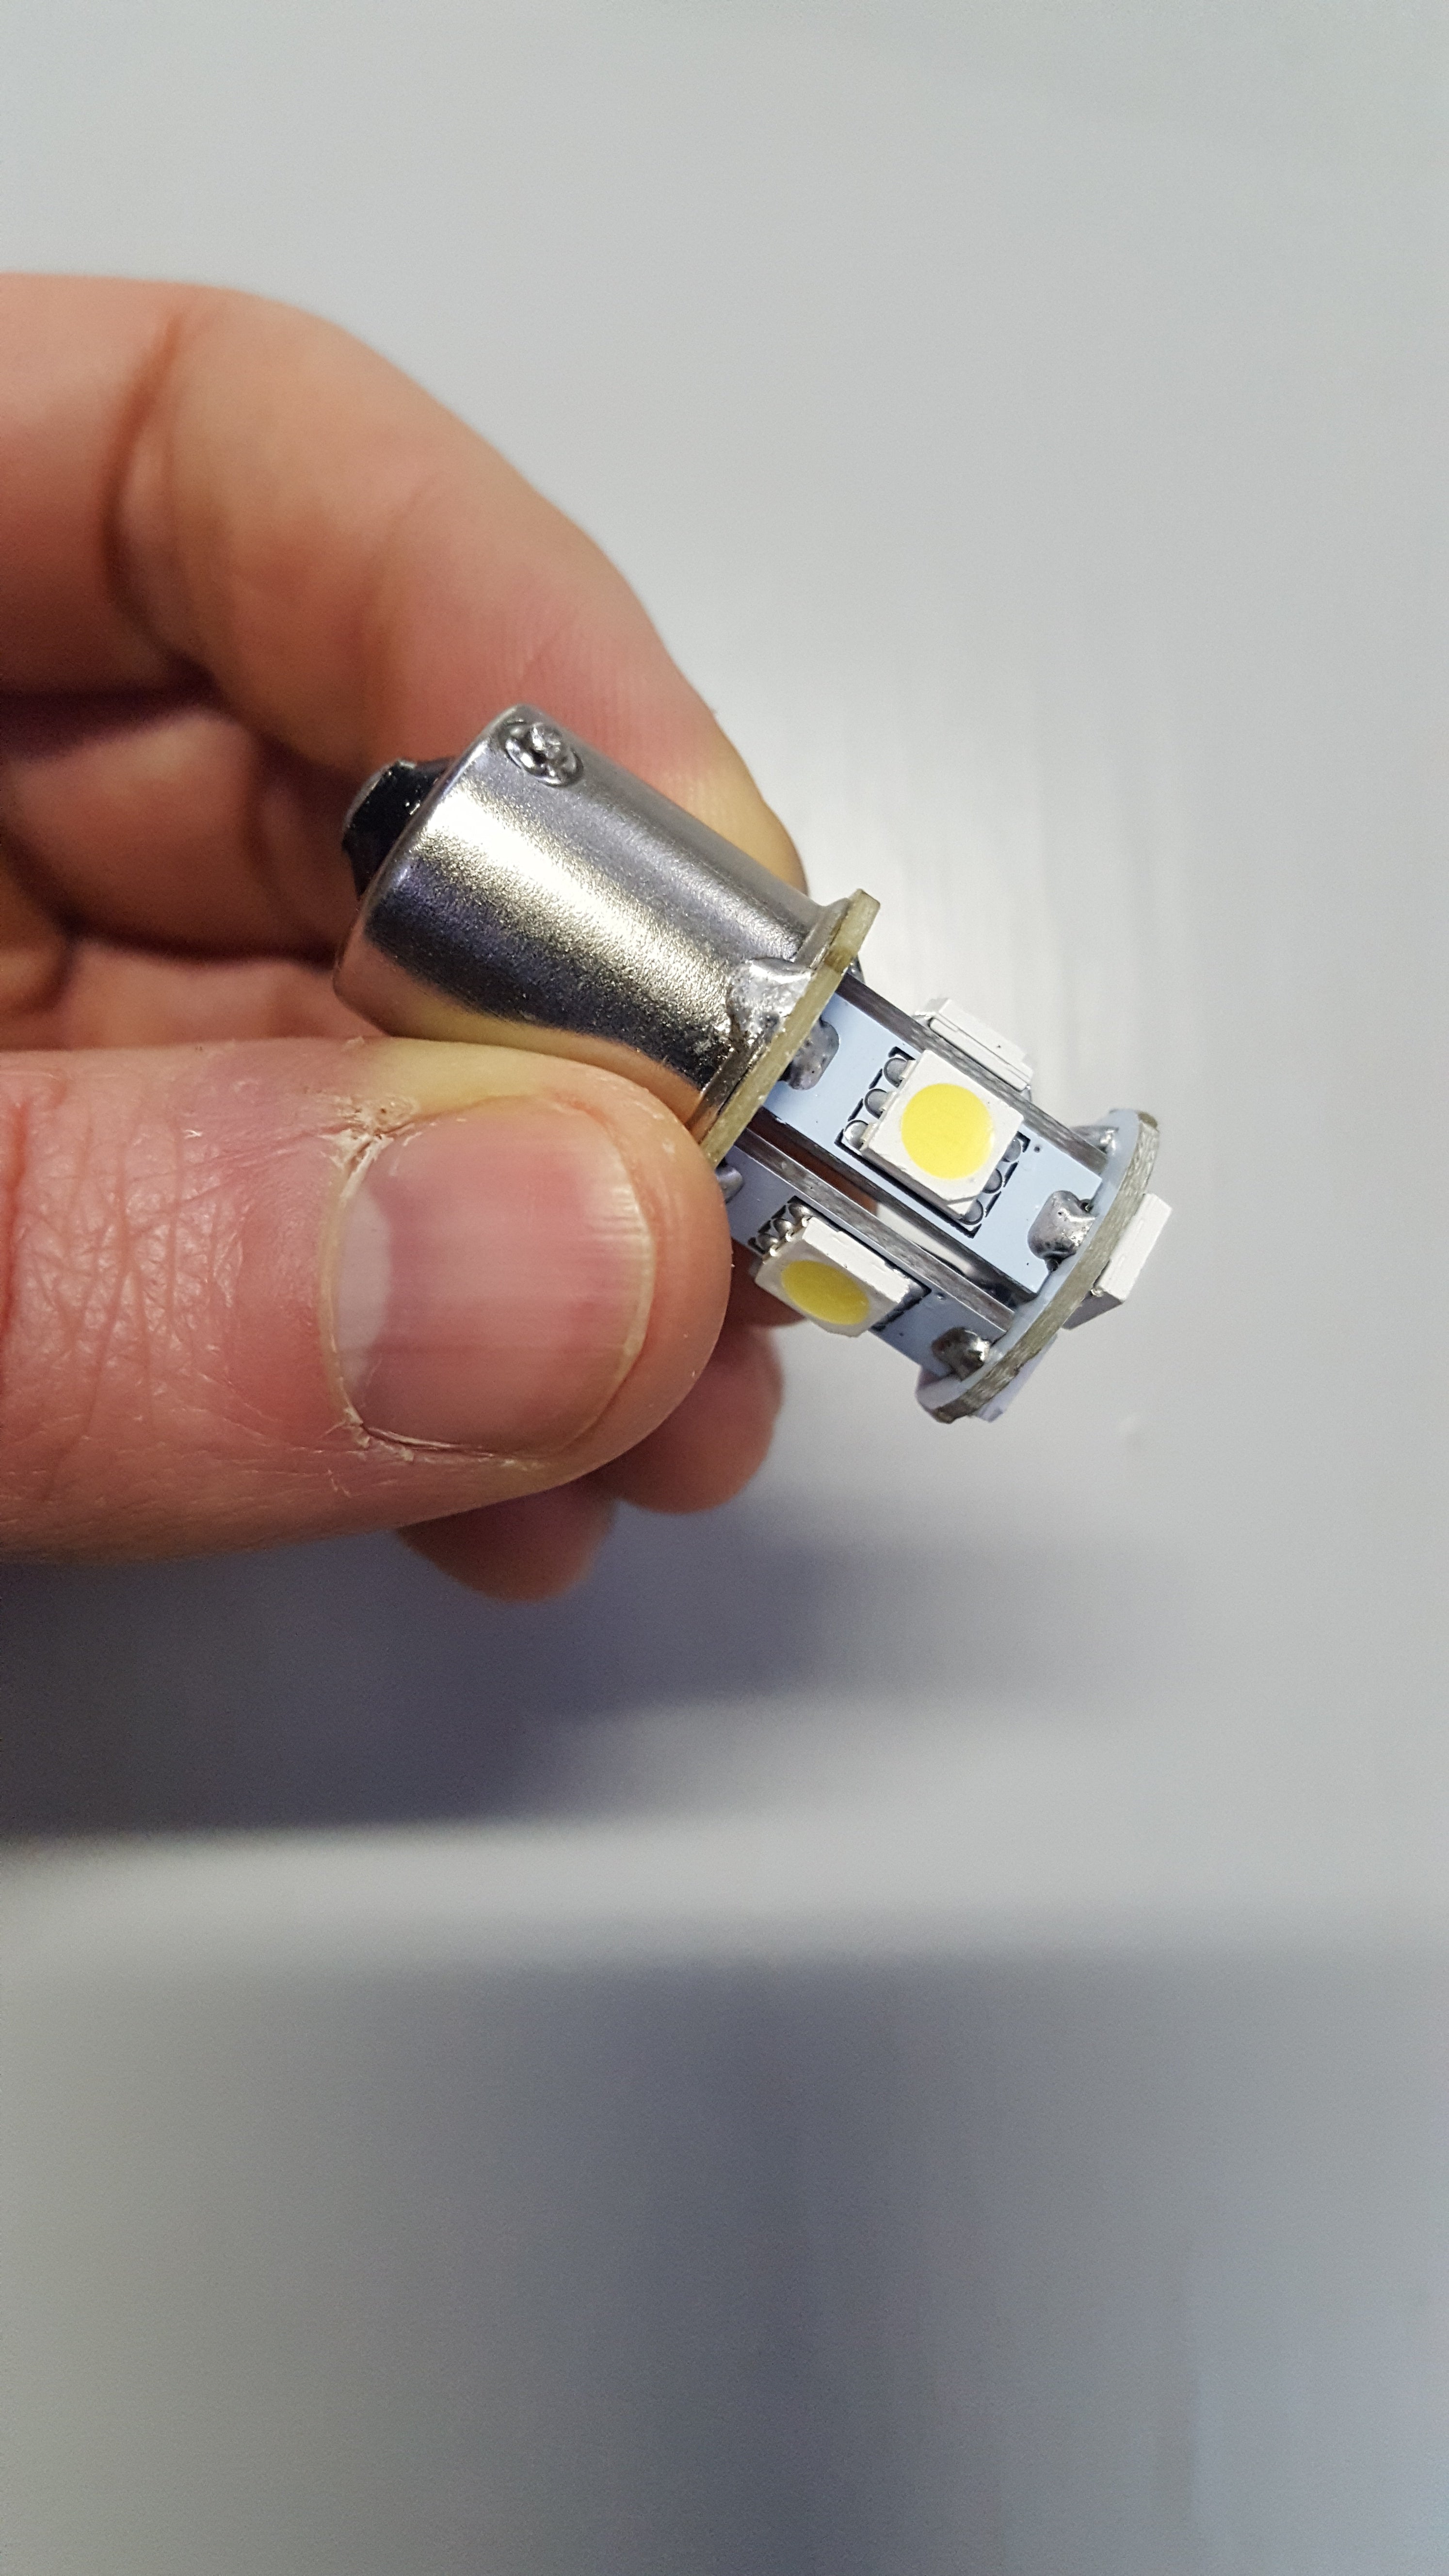 Torlok 24v Premium LED enkeltkontakt baglygtepærer erstatter 149/248, blinklys / indikator - 24v LED pærer - LED pære